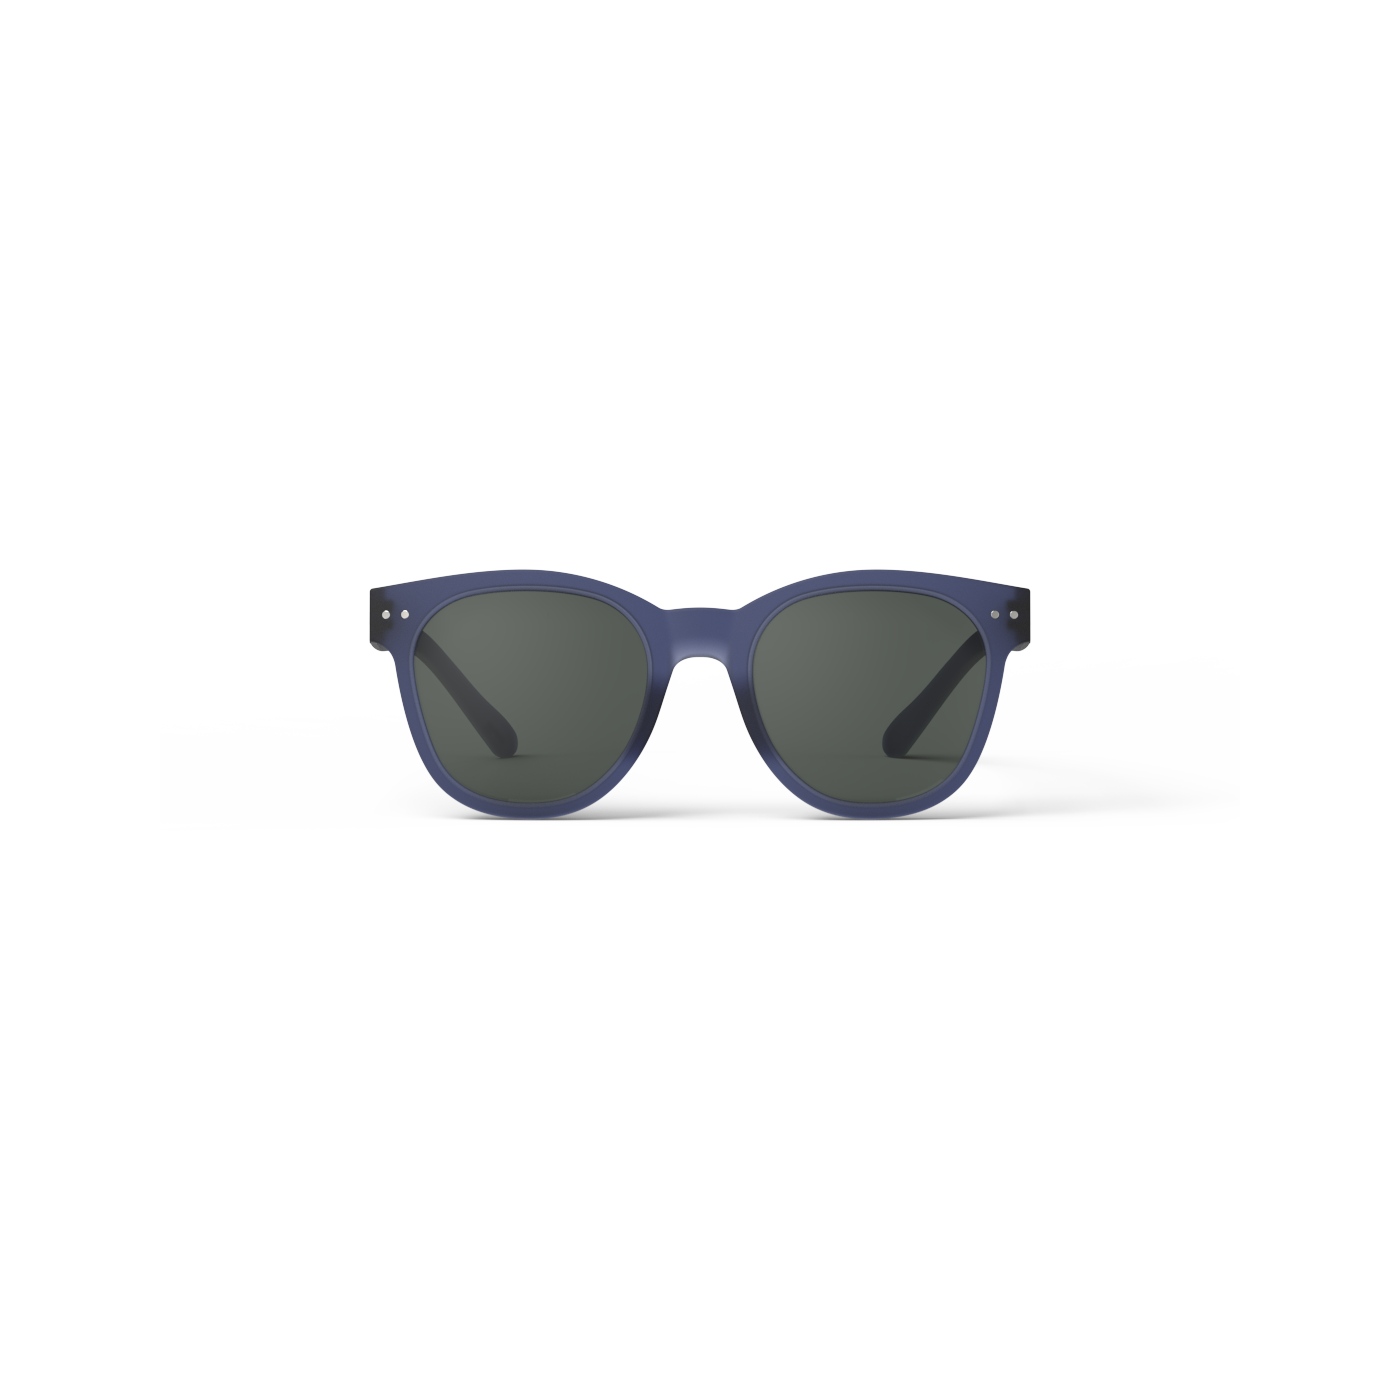 n-sun-night-blue-oversized-sunglasses-izipizi-2-cad-eauonline.jpg